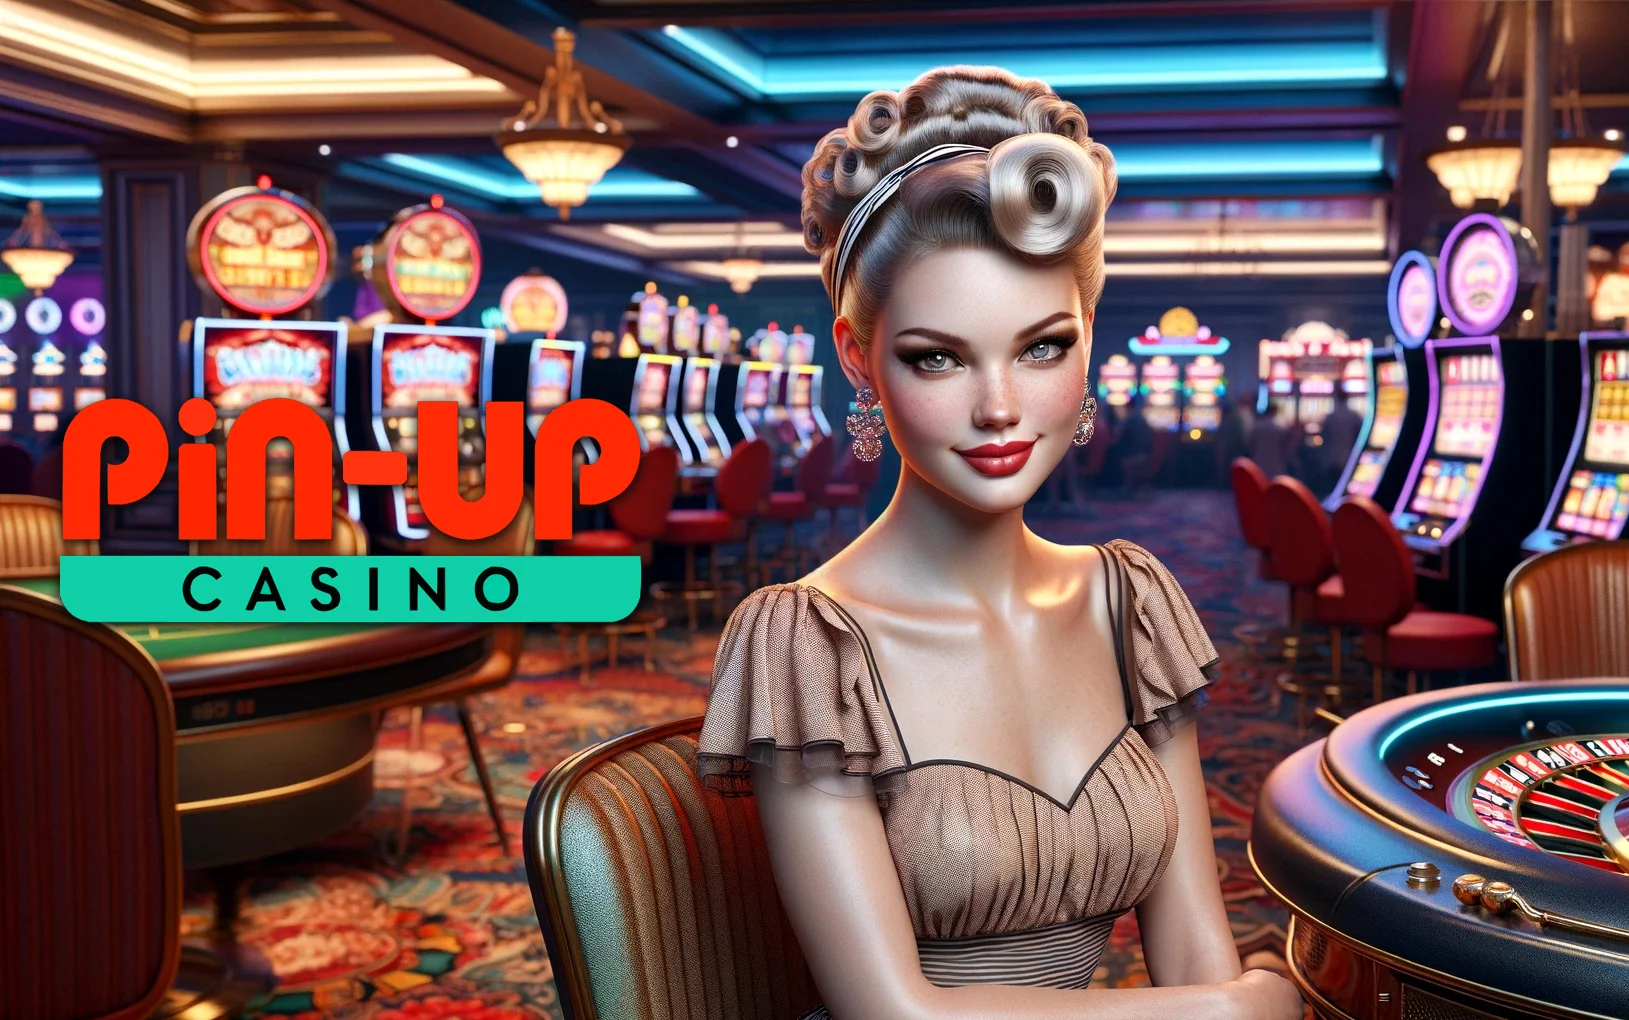 Pin-Up казино